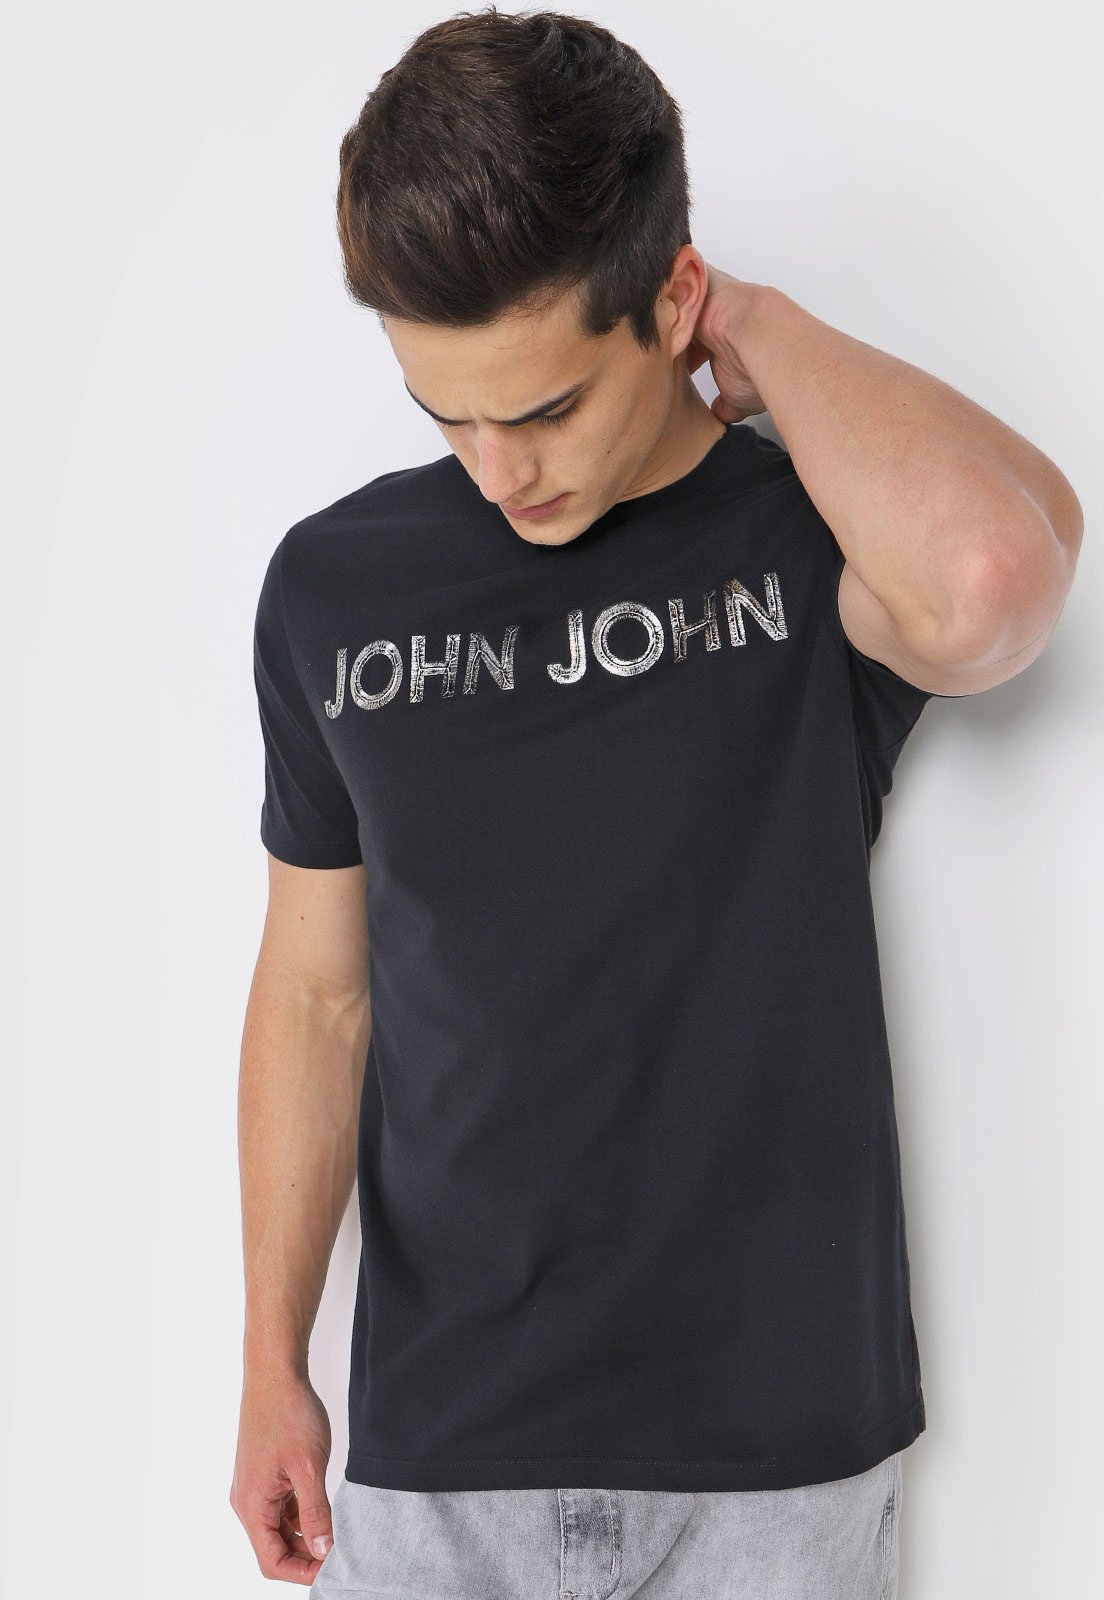 Camiseta John John Logo Metal Preta - Compre Agora, camiseta john